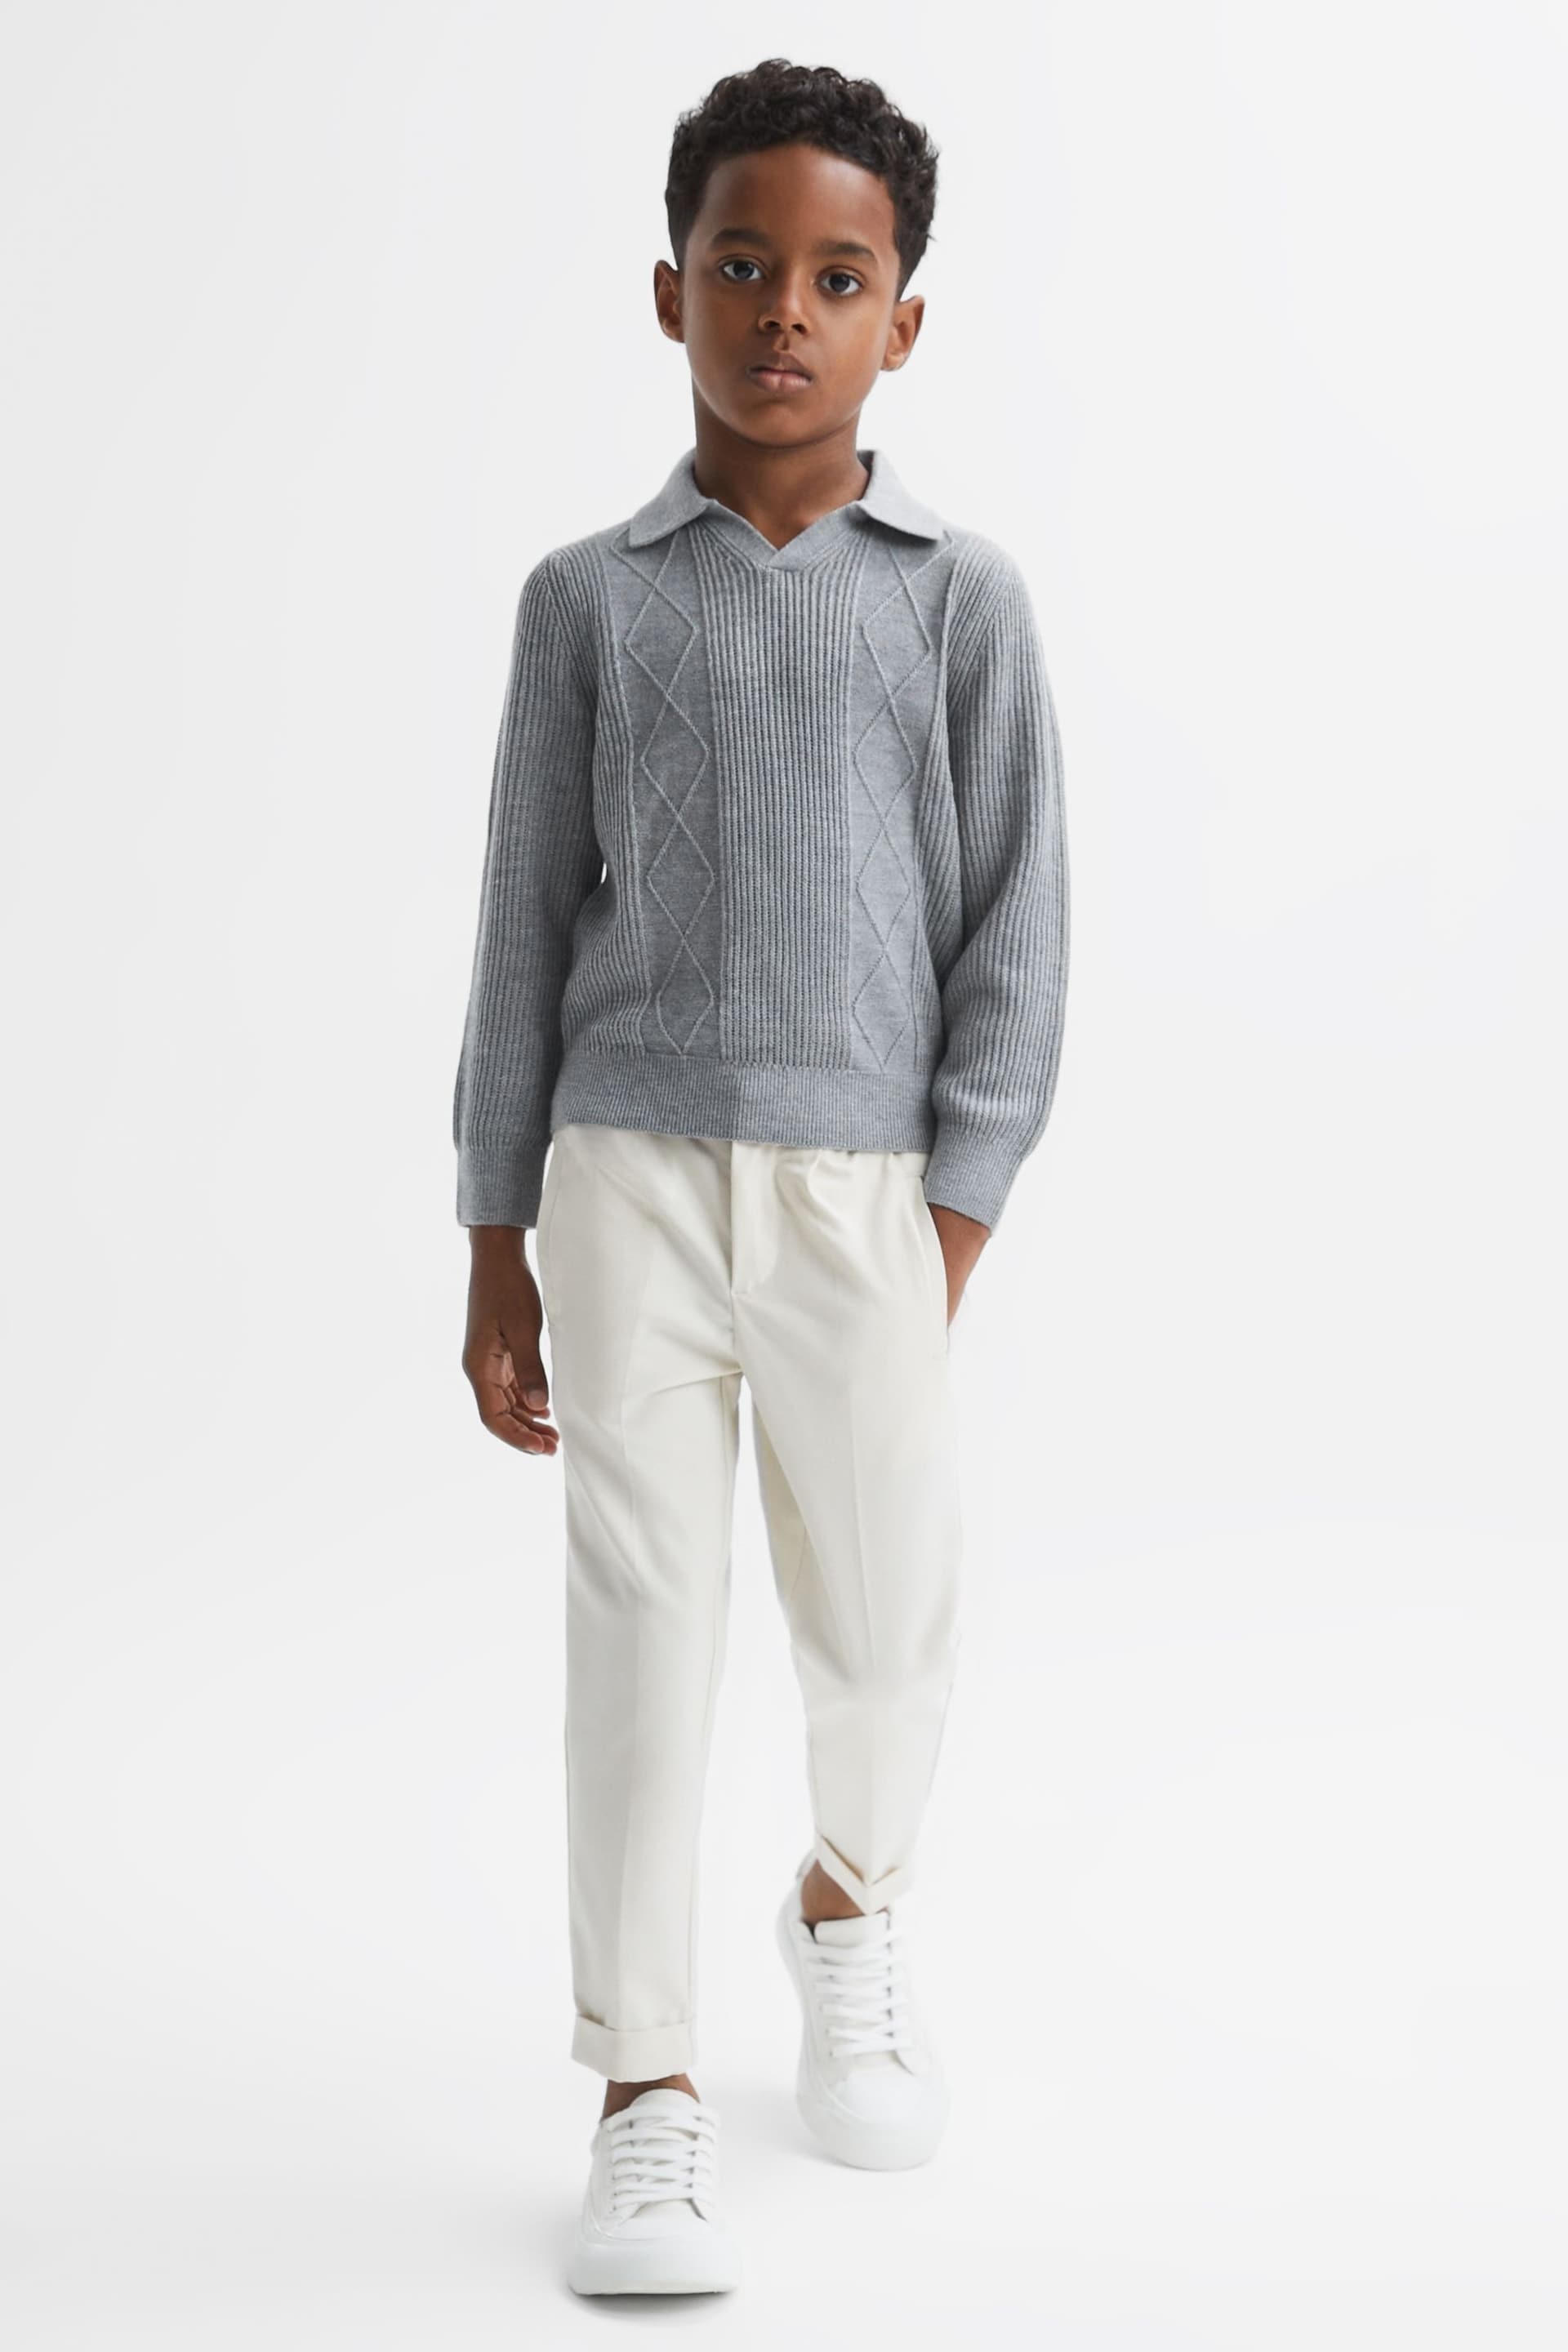 Reiss Soft Grey Melange Malik Junior Knitted Open-Collar Top - Image 1 of 6